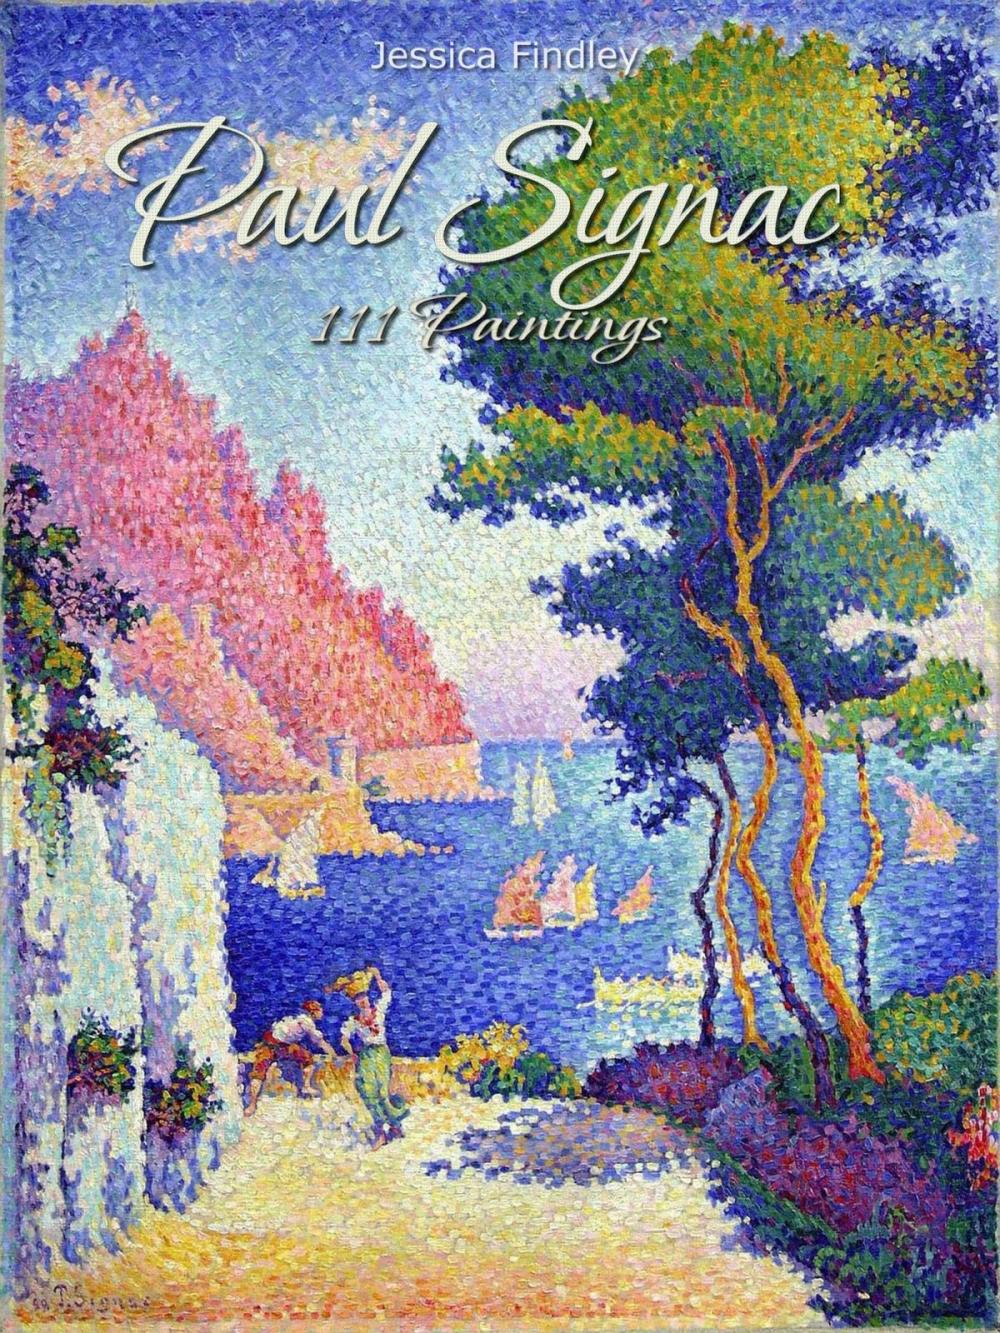 Big bigCover of Paul Signac: 111 Paintings